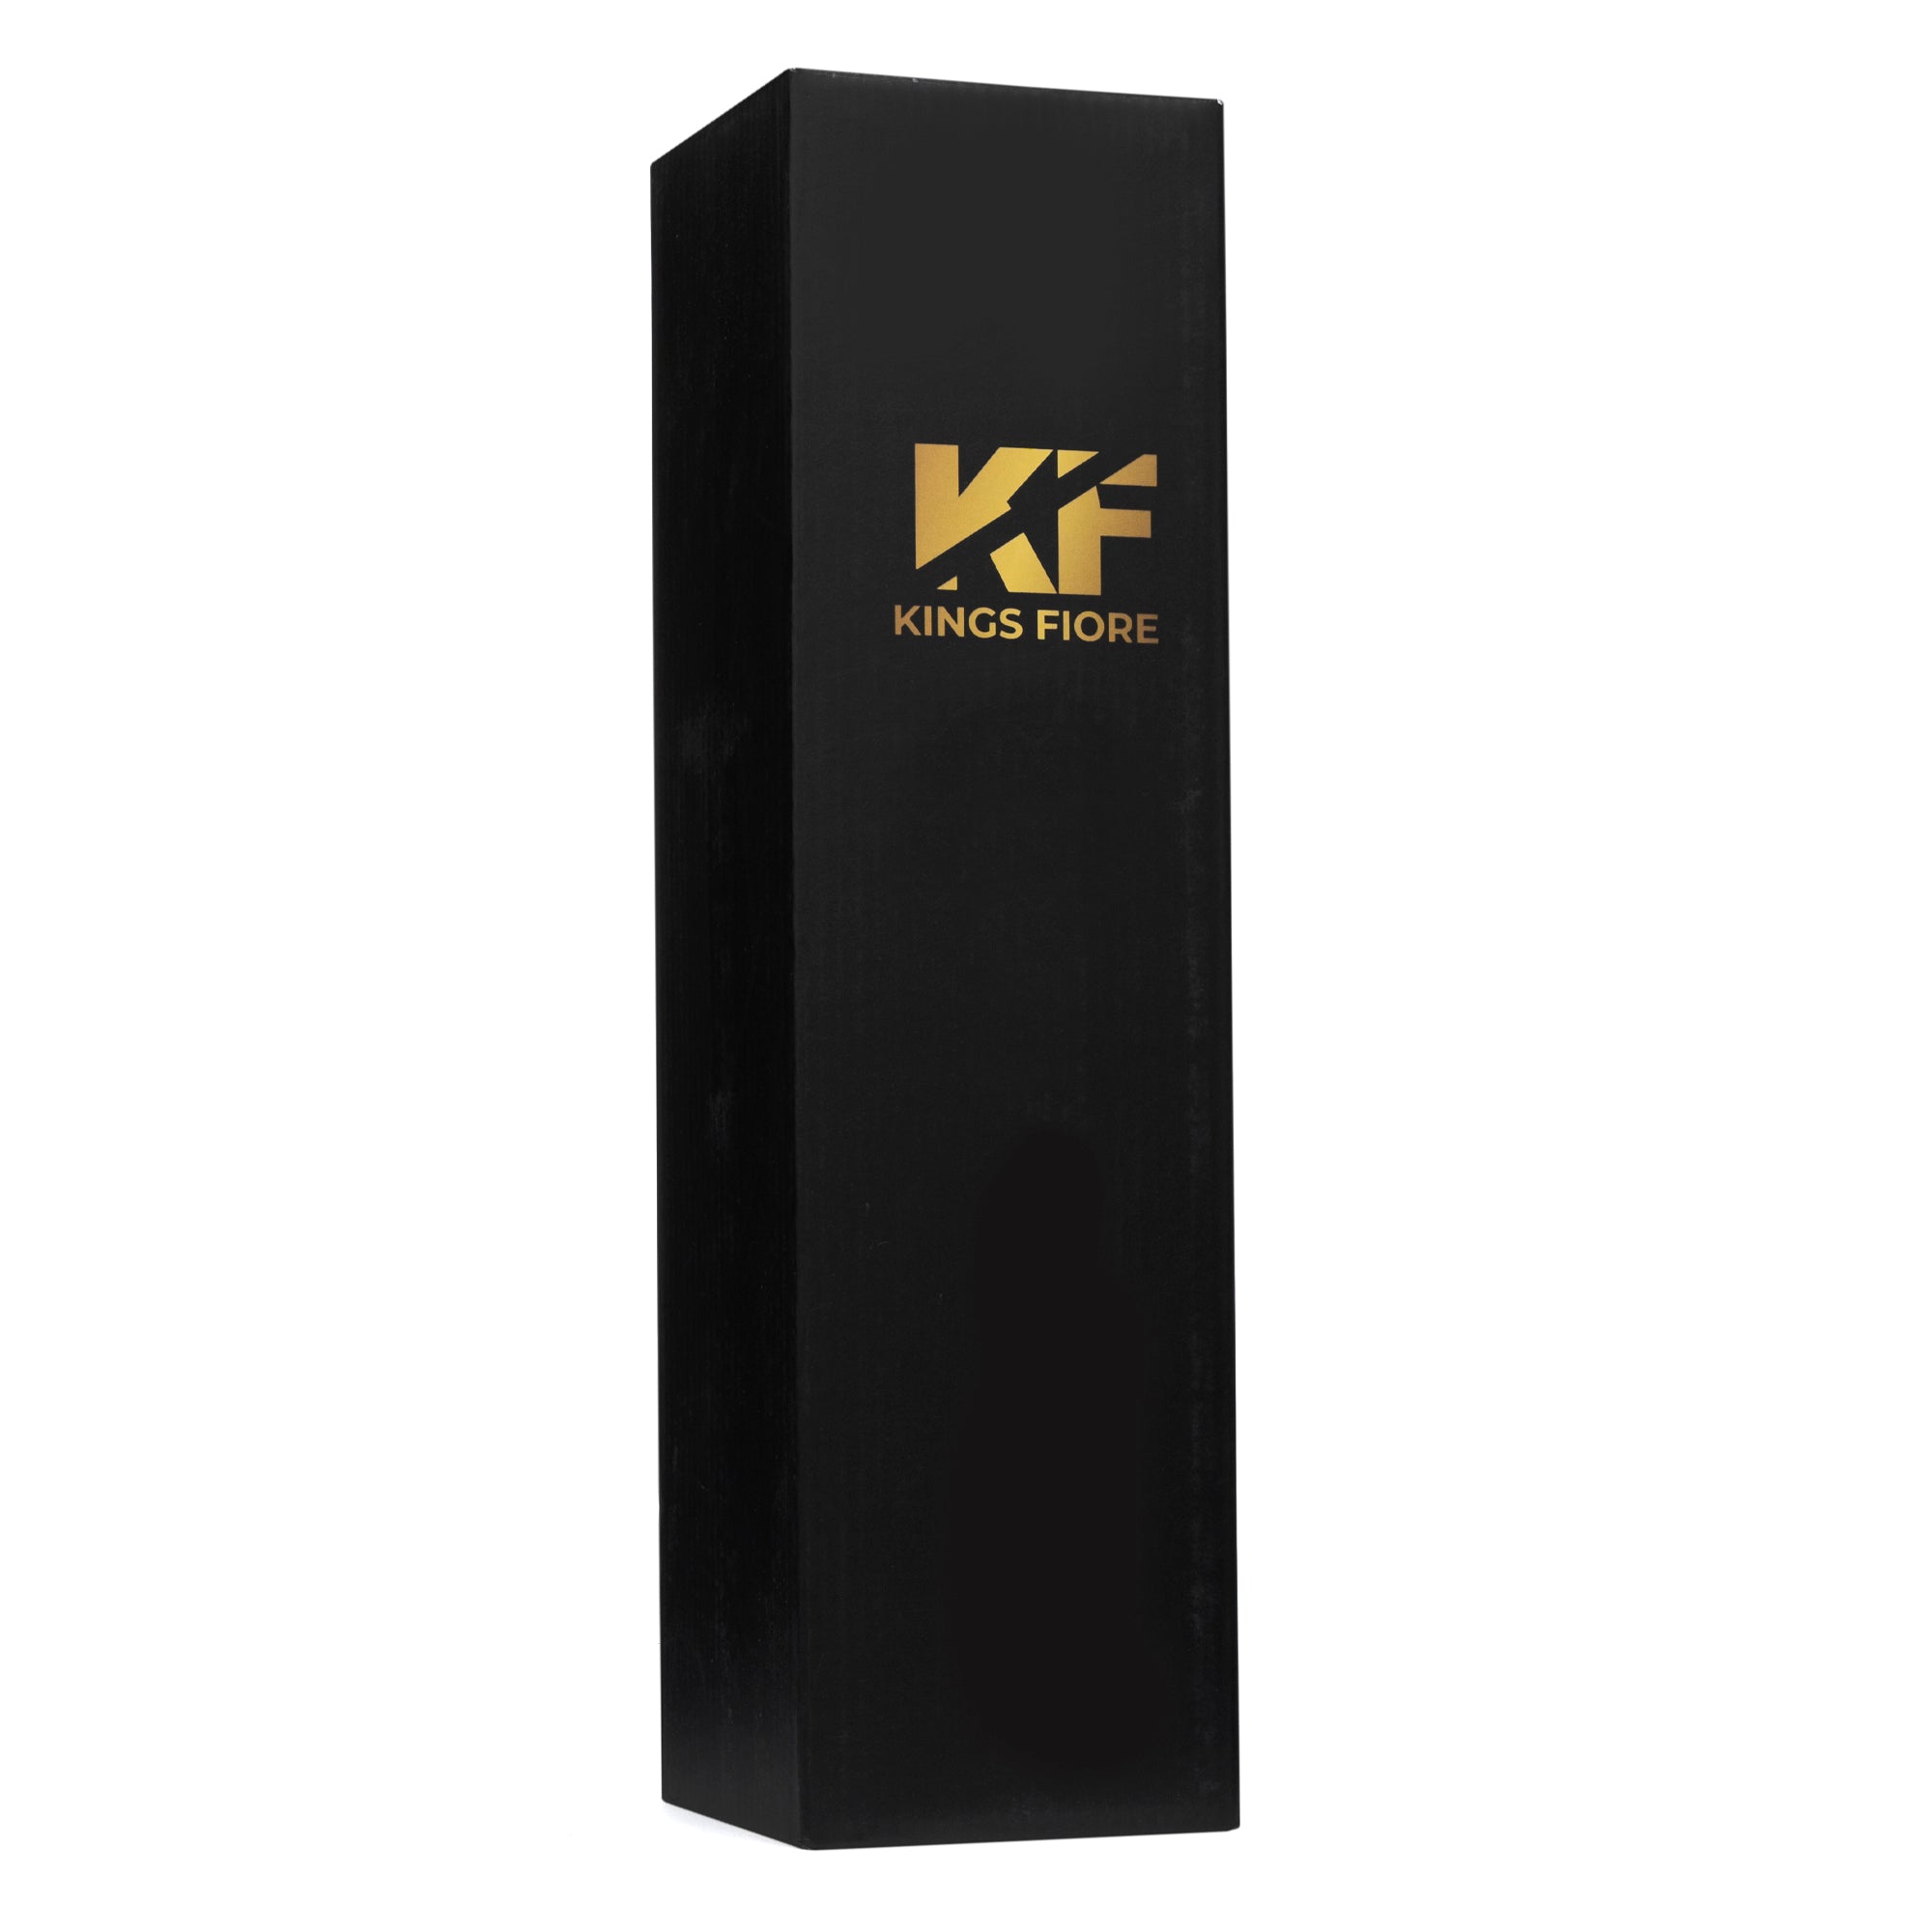 Kings Fiore Stainless Steel Water Bottle (40 oz, Black)